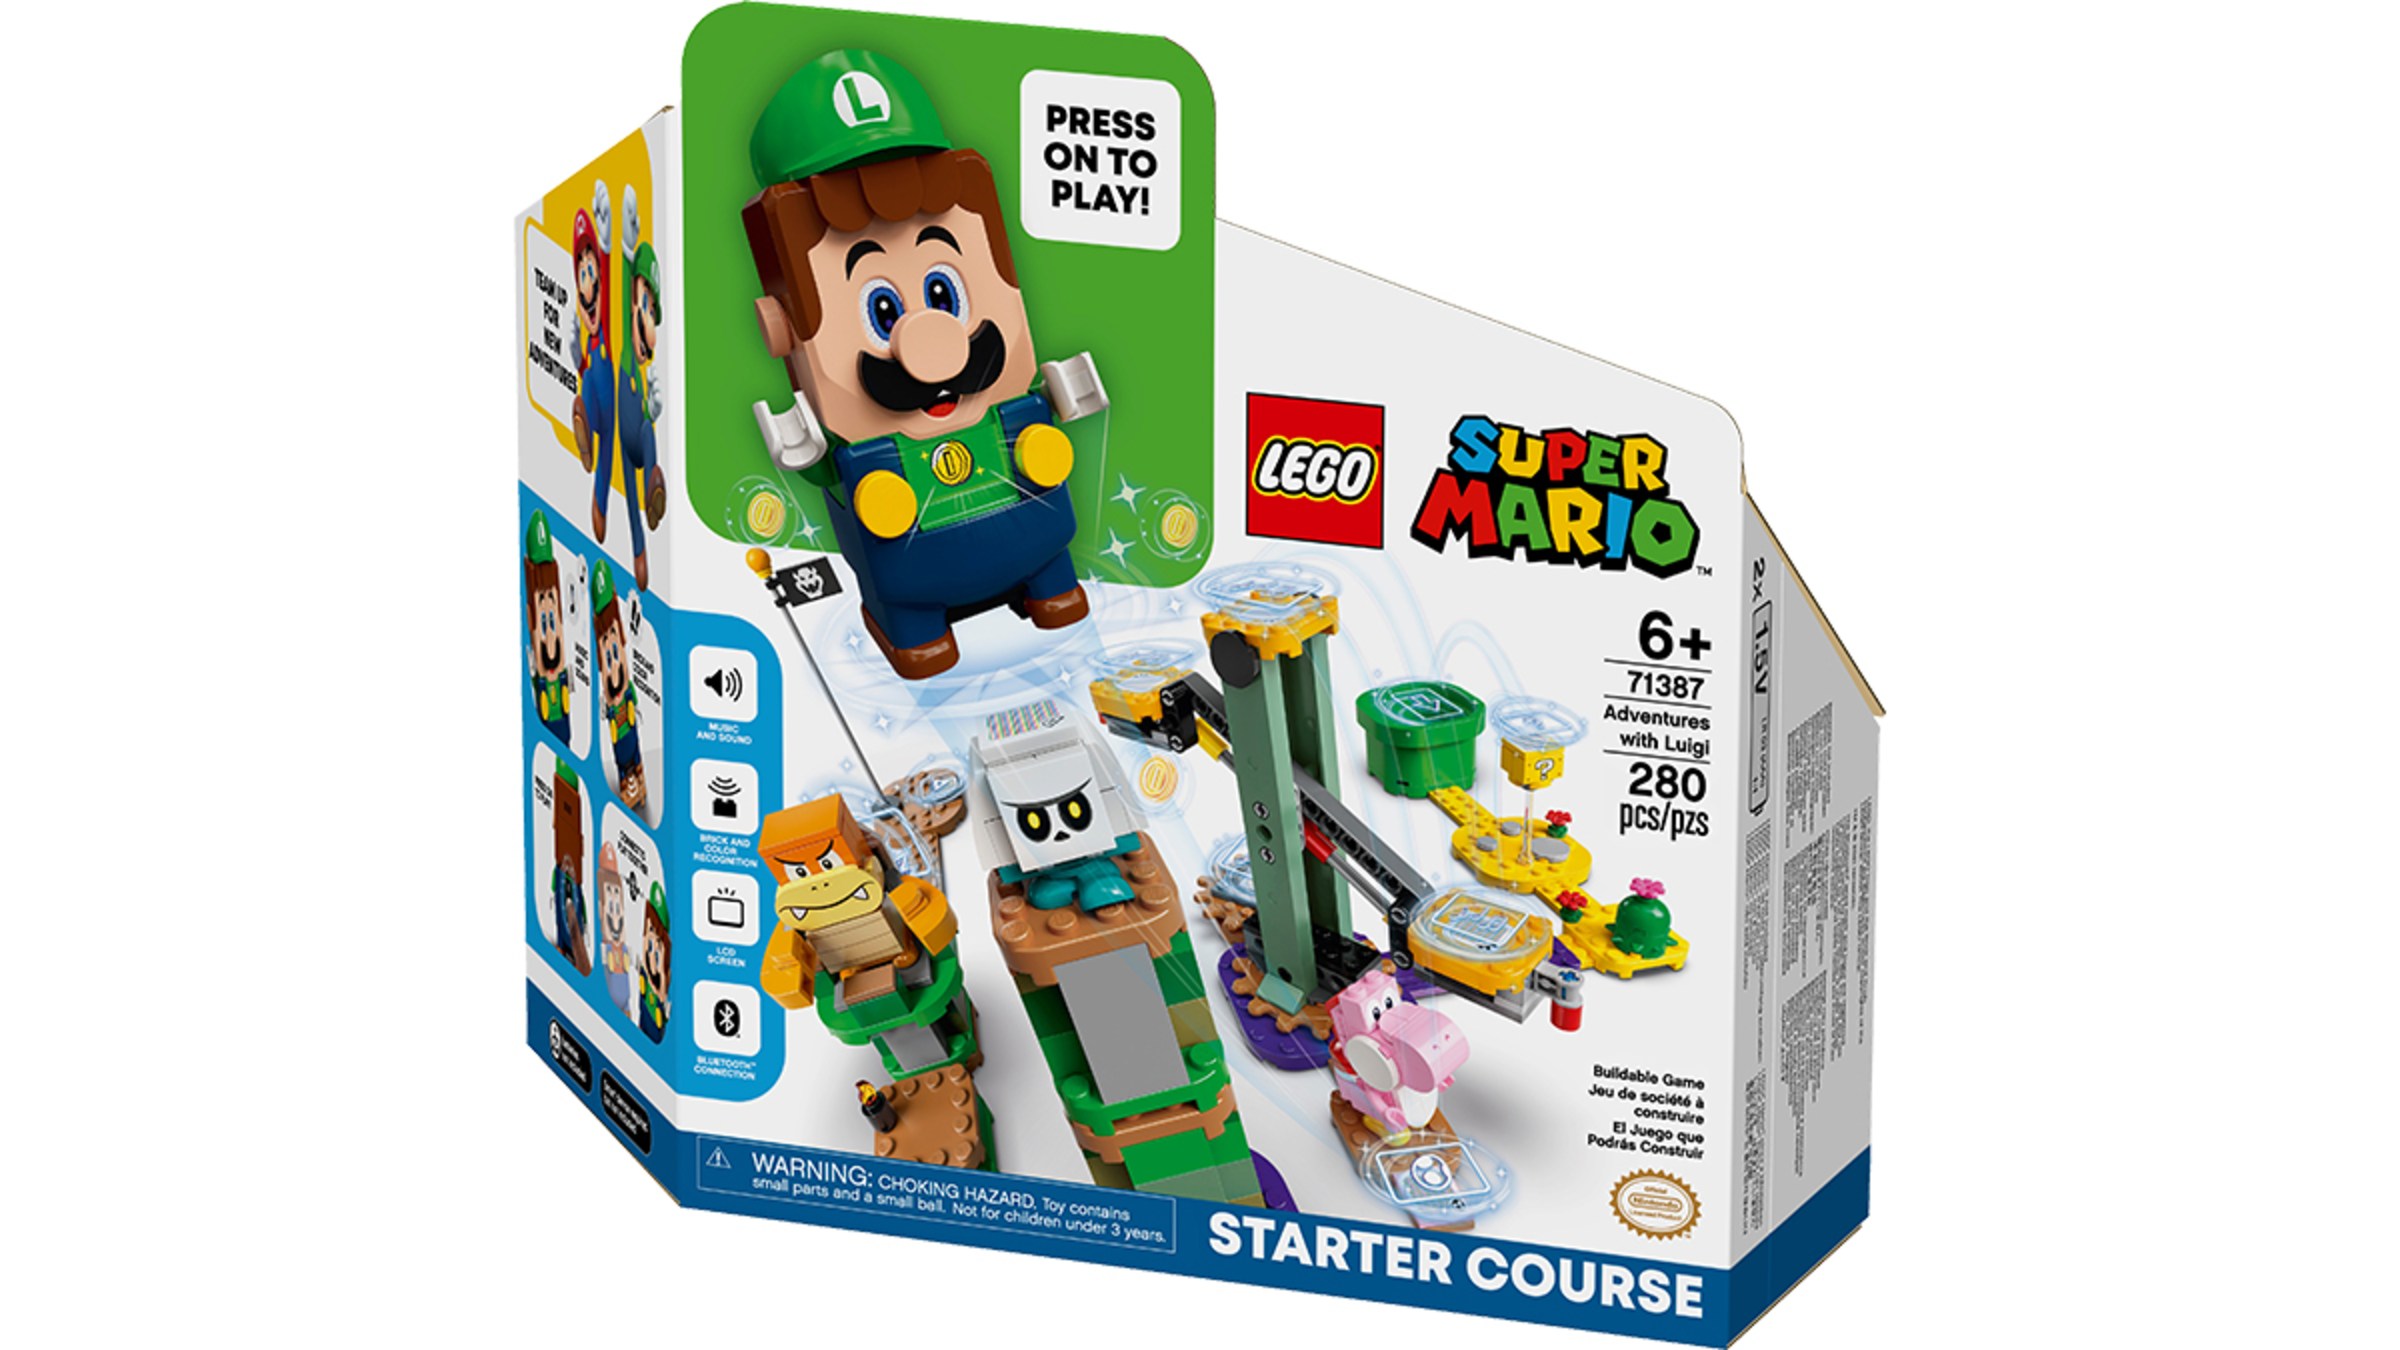 buste Encommium amerikansk dollar LEGO® Super Mario™ Adventures with Luigi Starter Course - Merchandise -  Nintendo Official Site